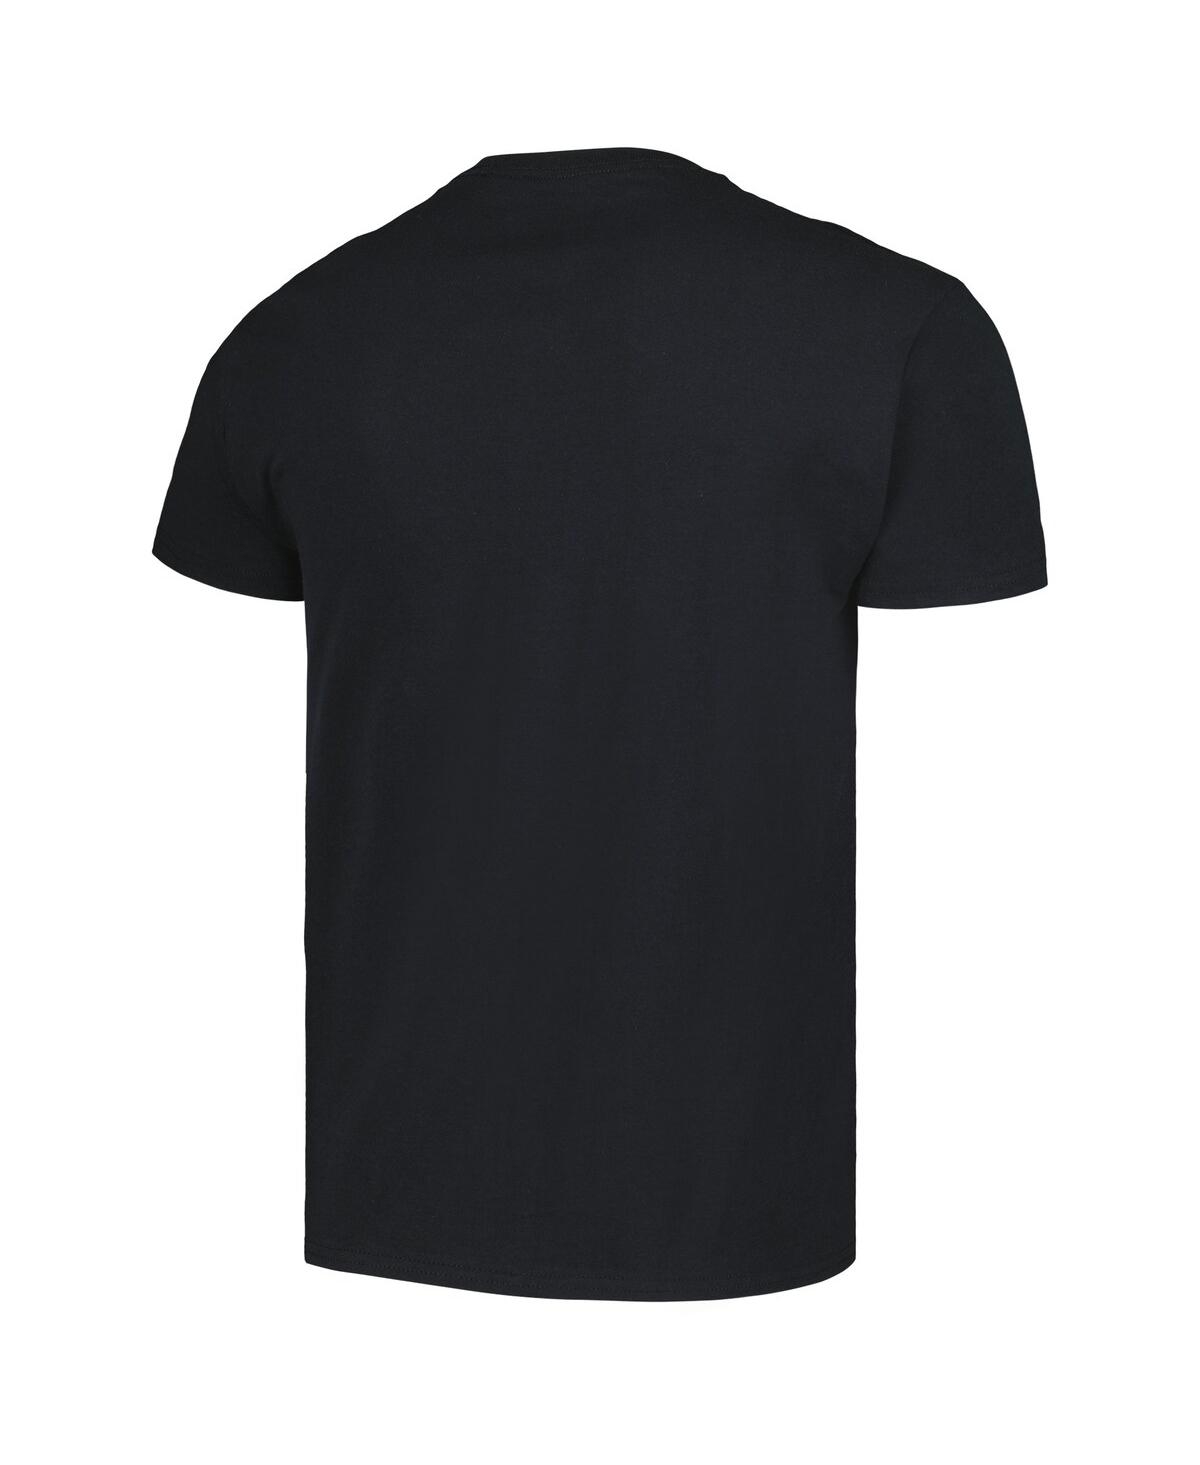 Shop Manhead Merch Men's Black Billy Idol T-shirt